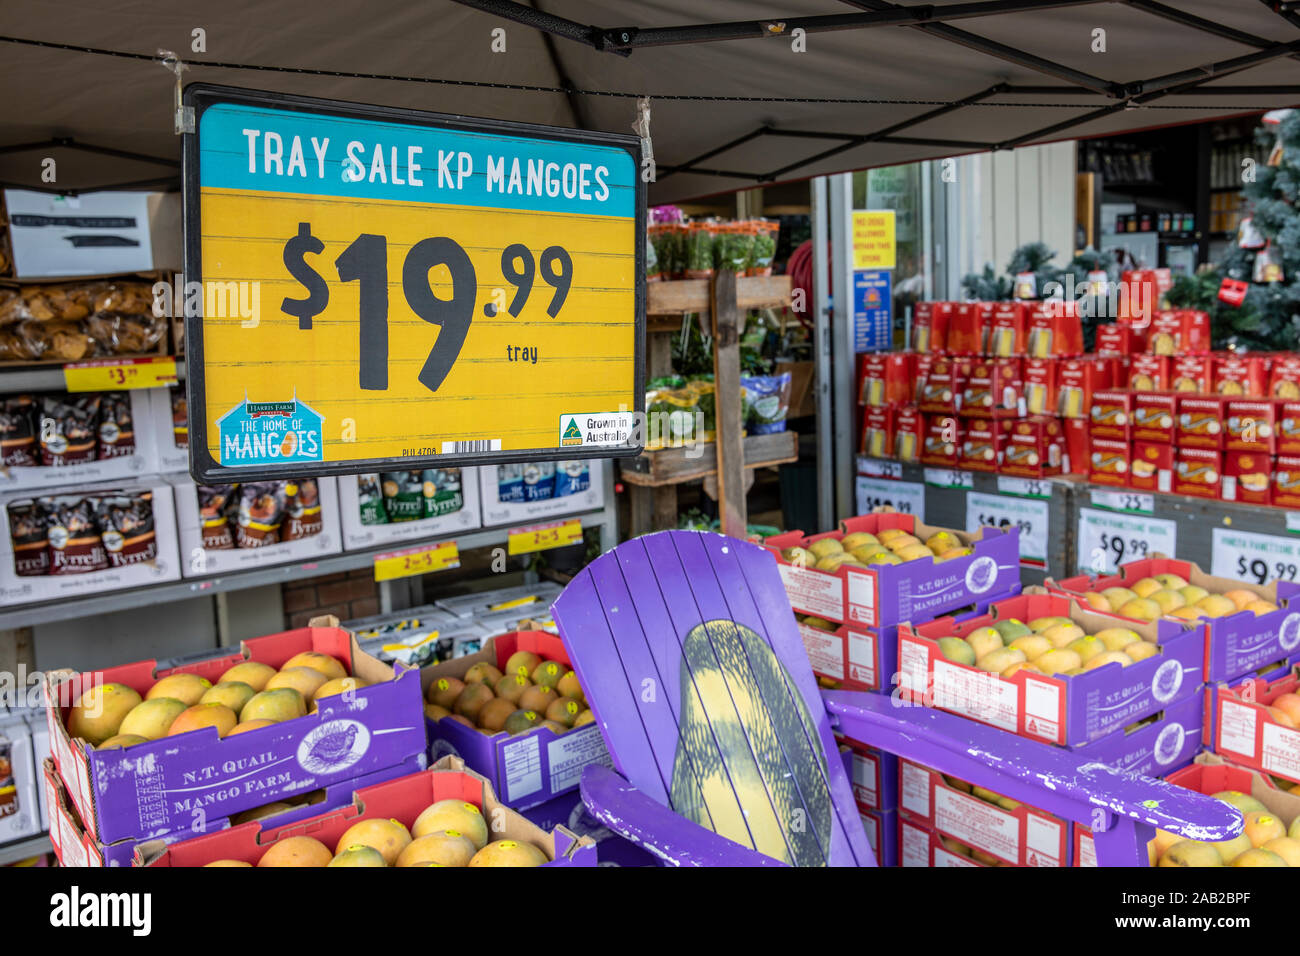 Harris Farm supermarket and trays of mangoes on sale in Sydney,Australia Stock Photo